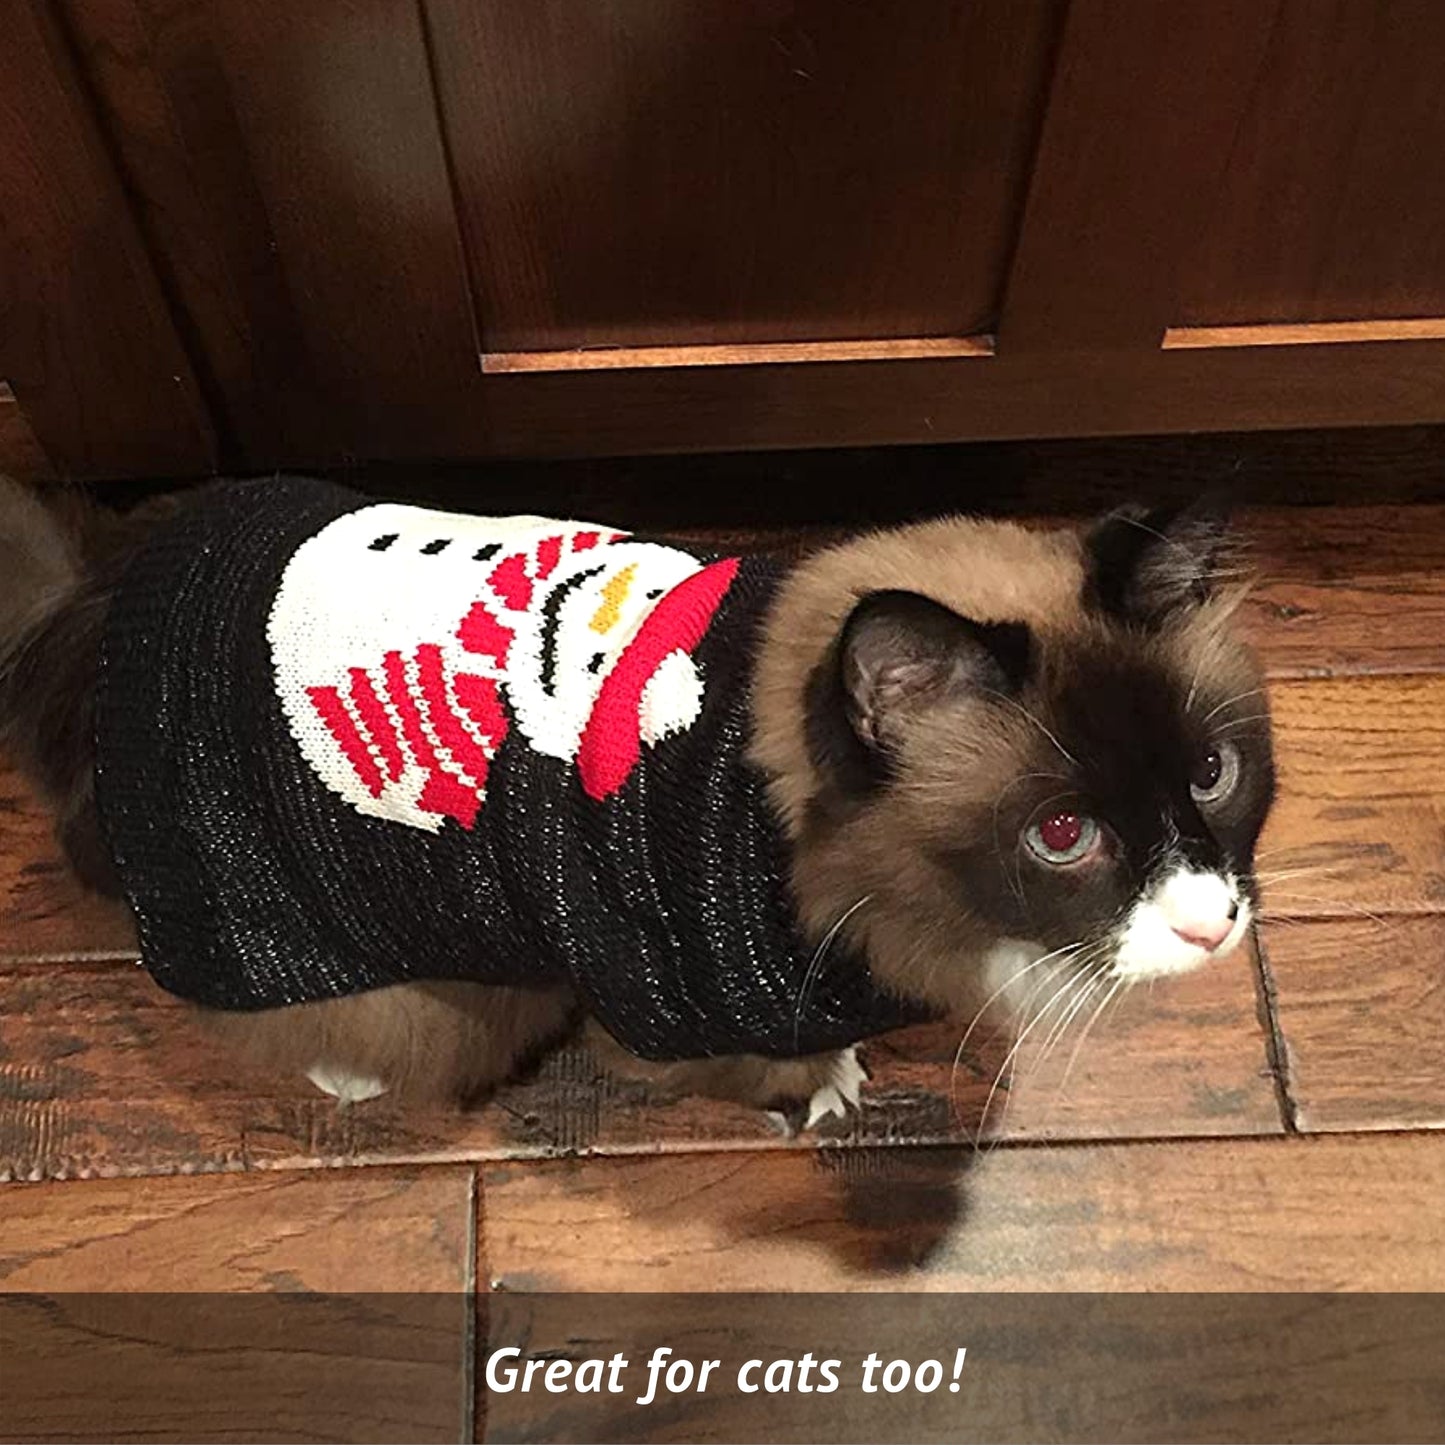 Midlee Winter Snowman Dog Sweater